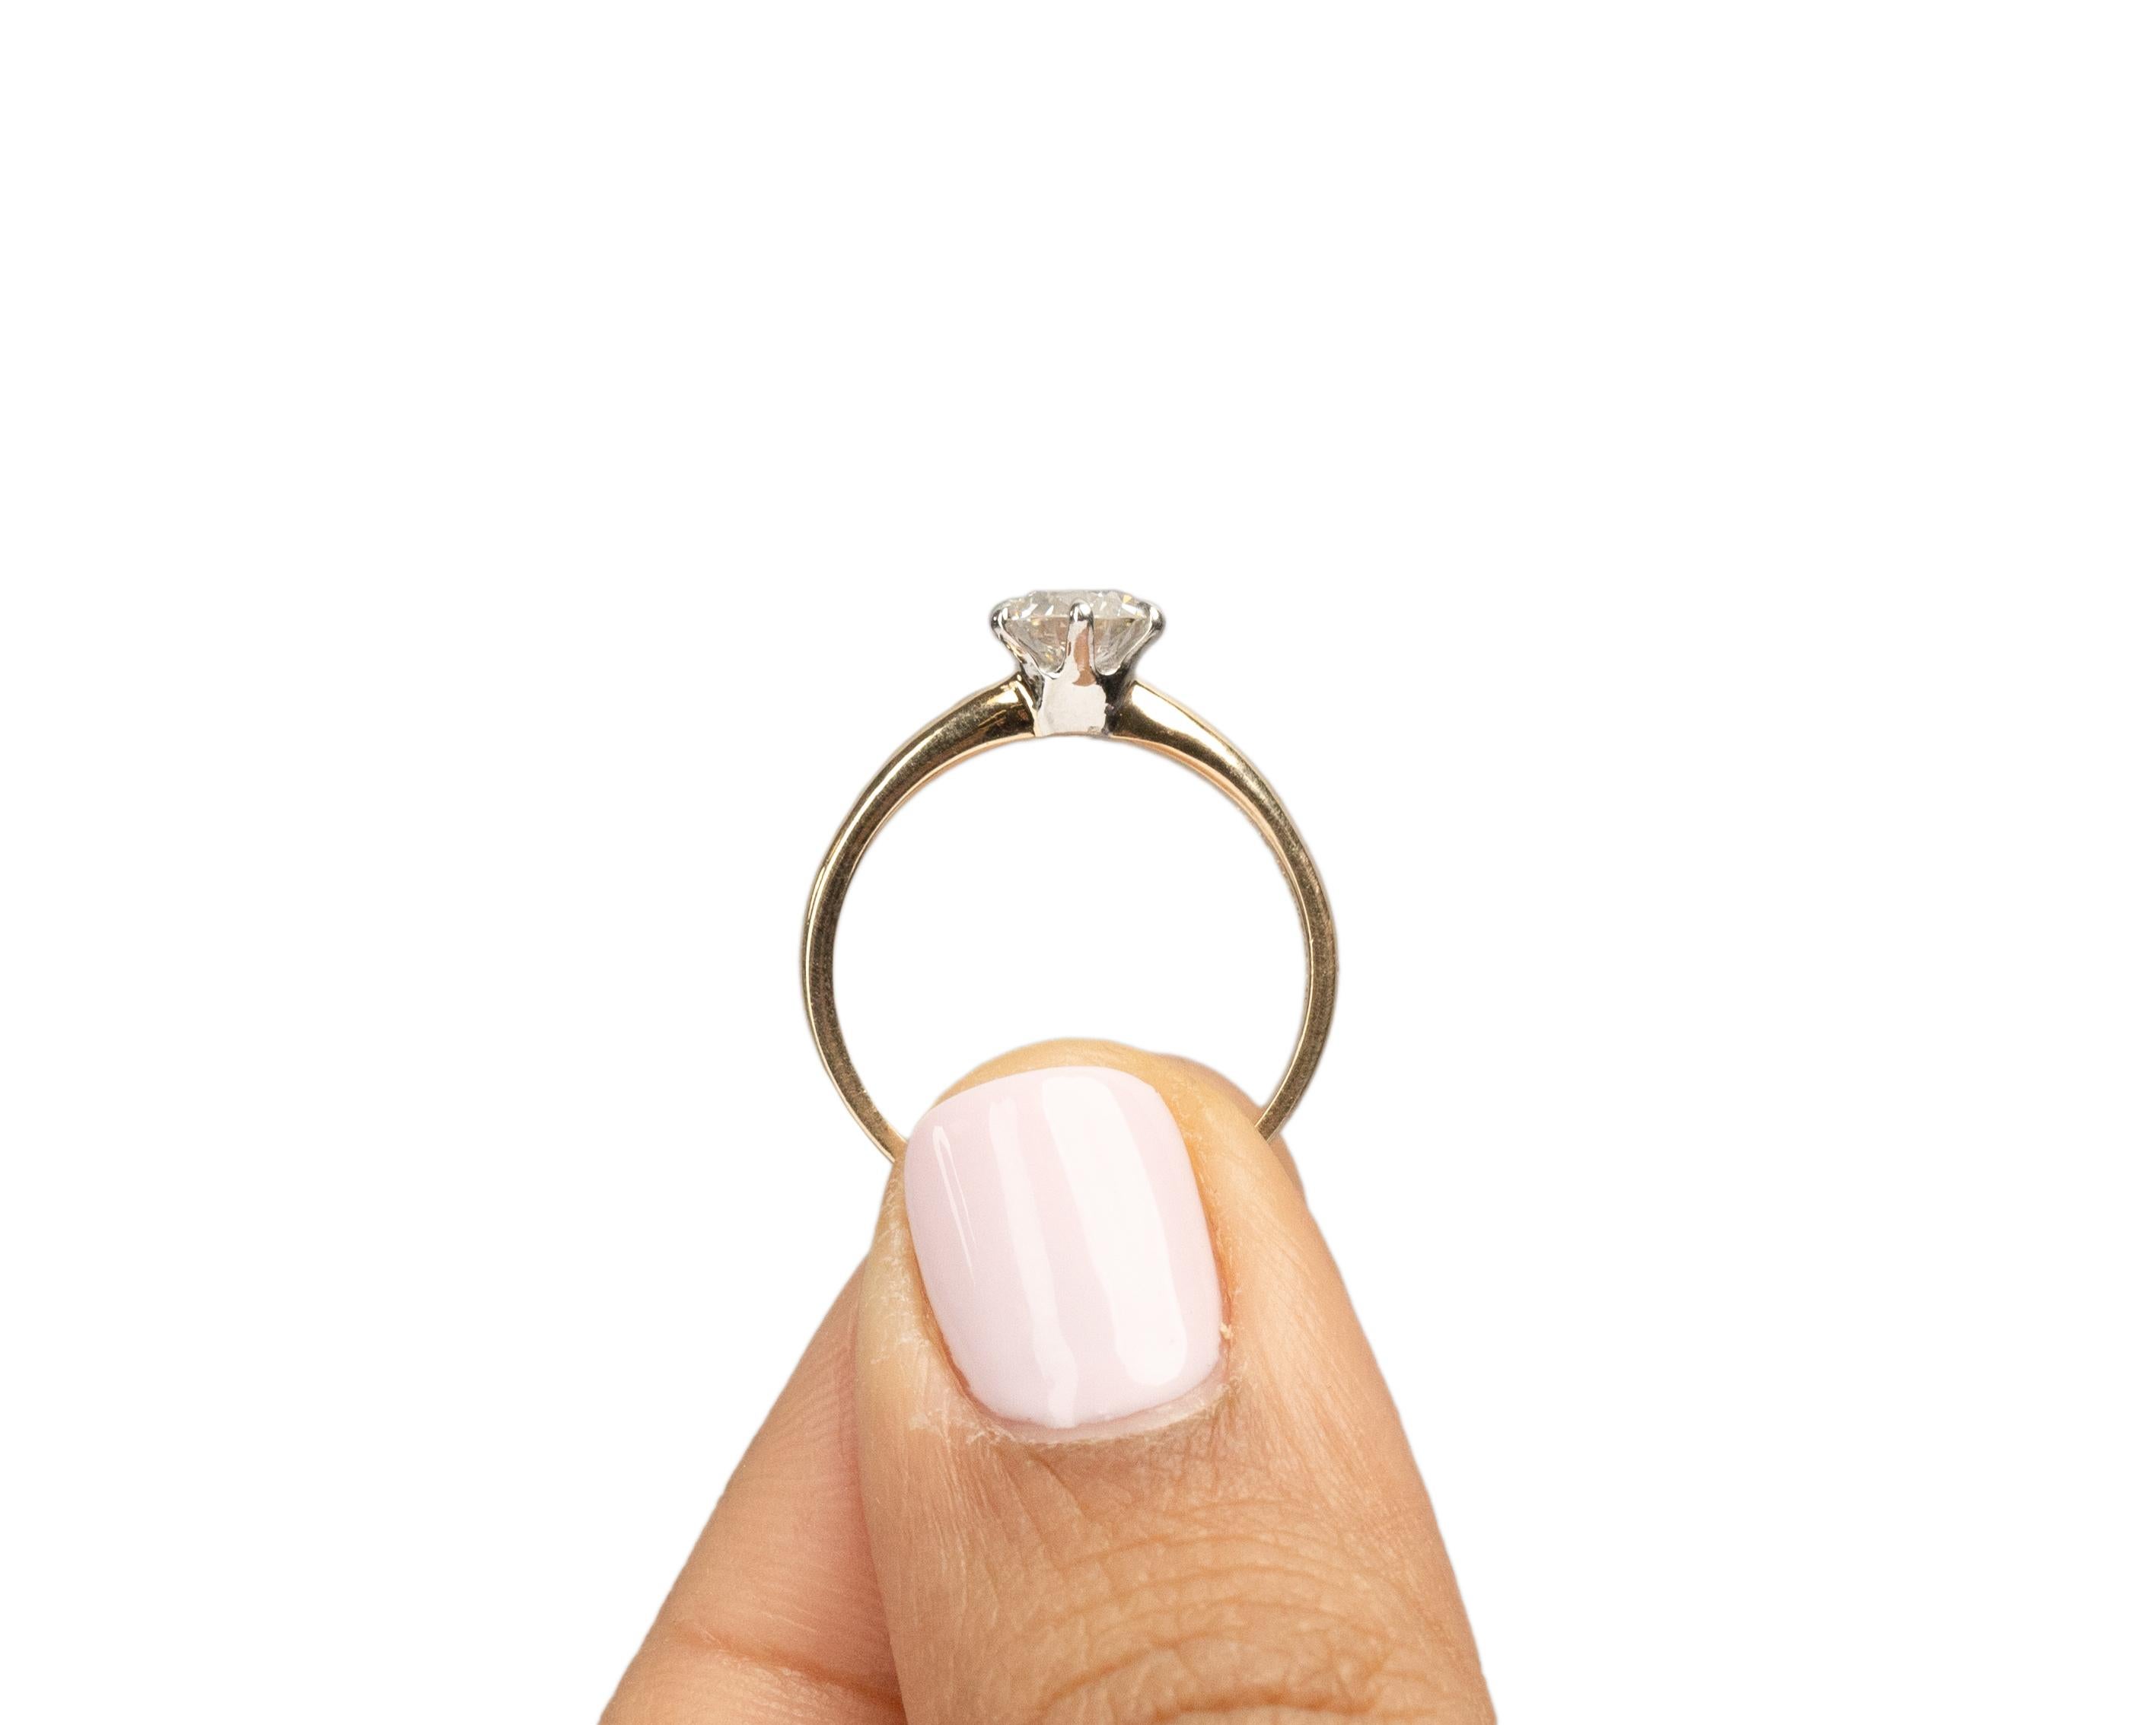 35 carat diamond ring